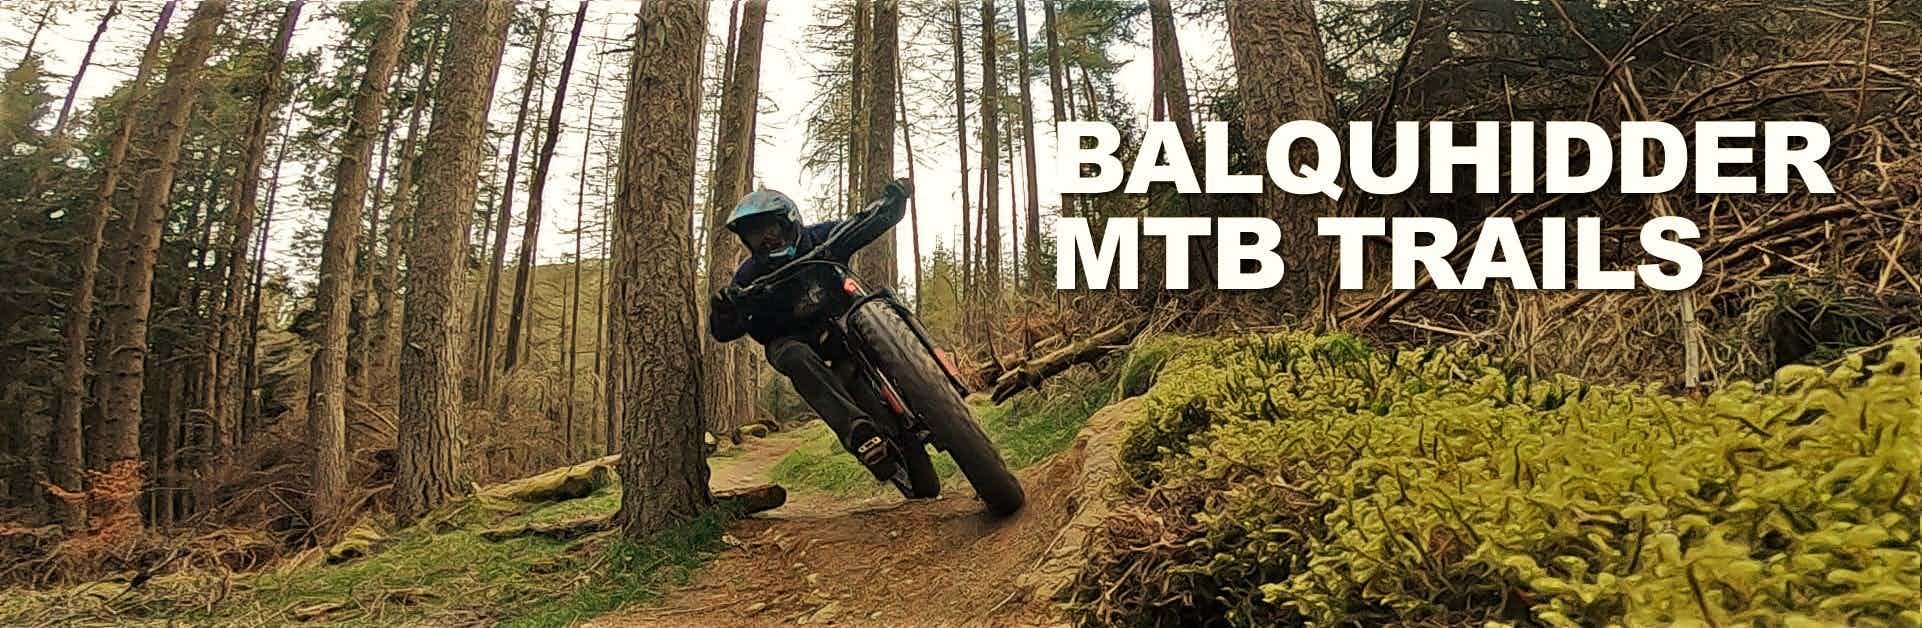 Balquhidder MTB Trails